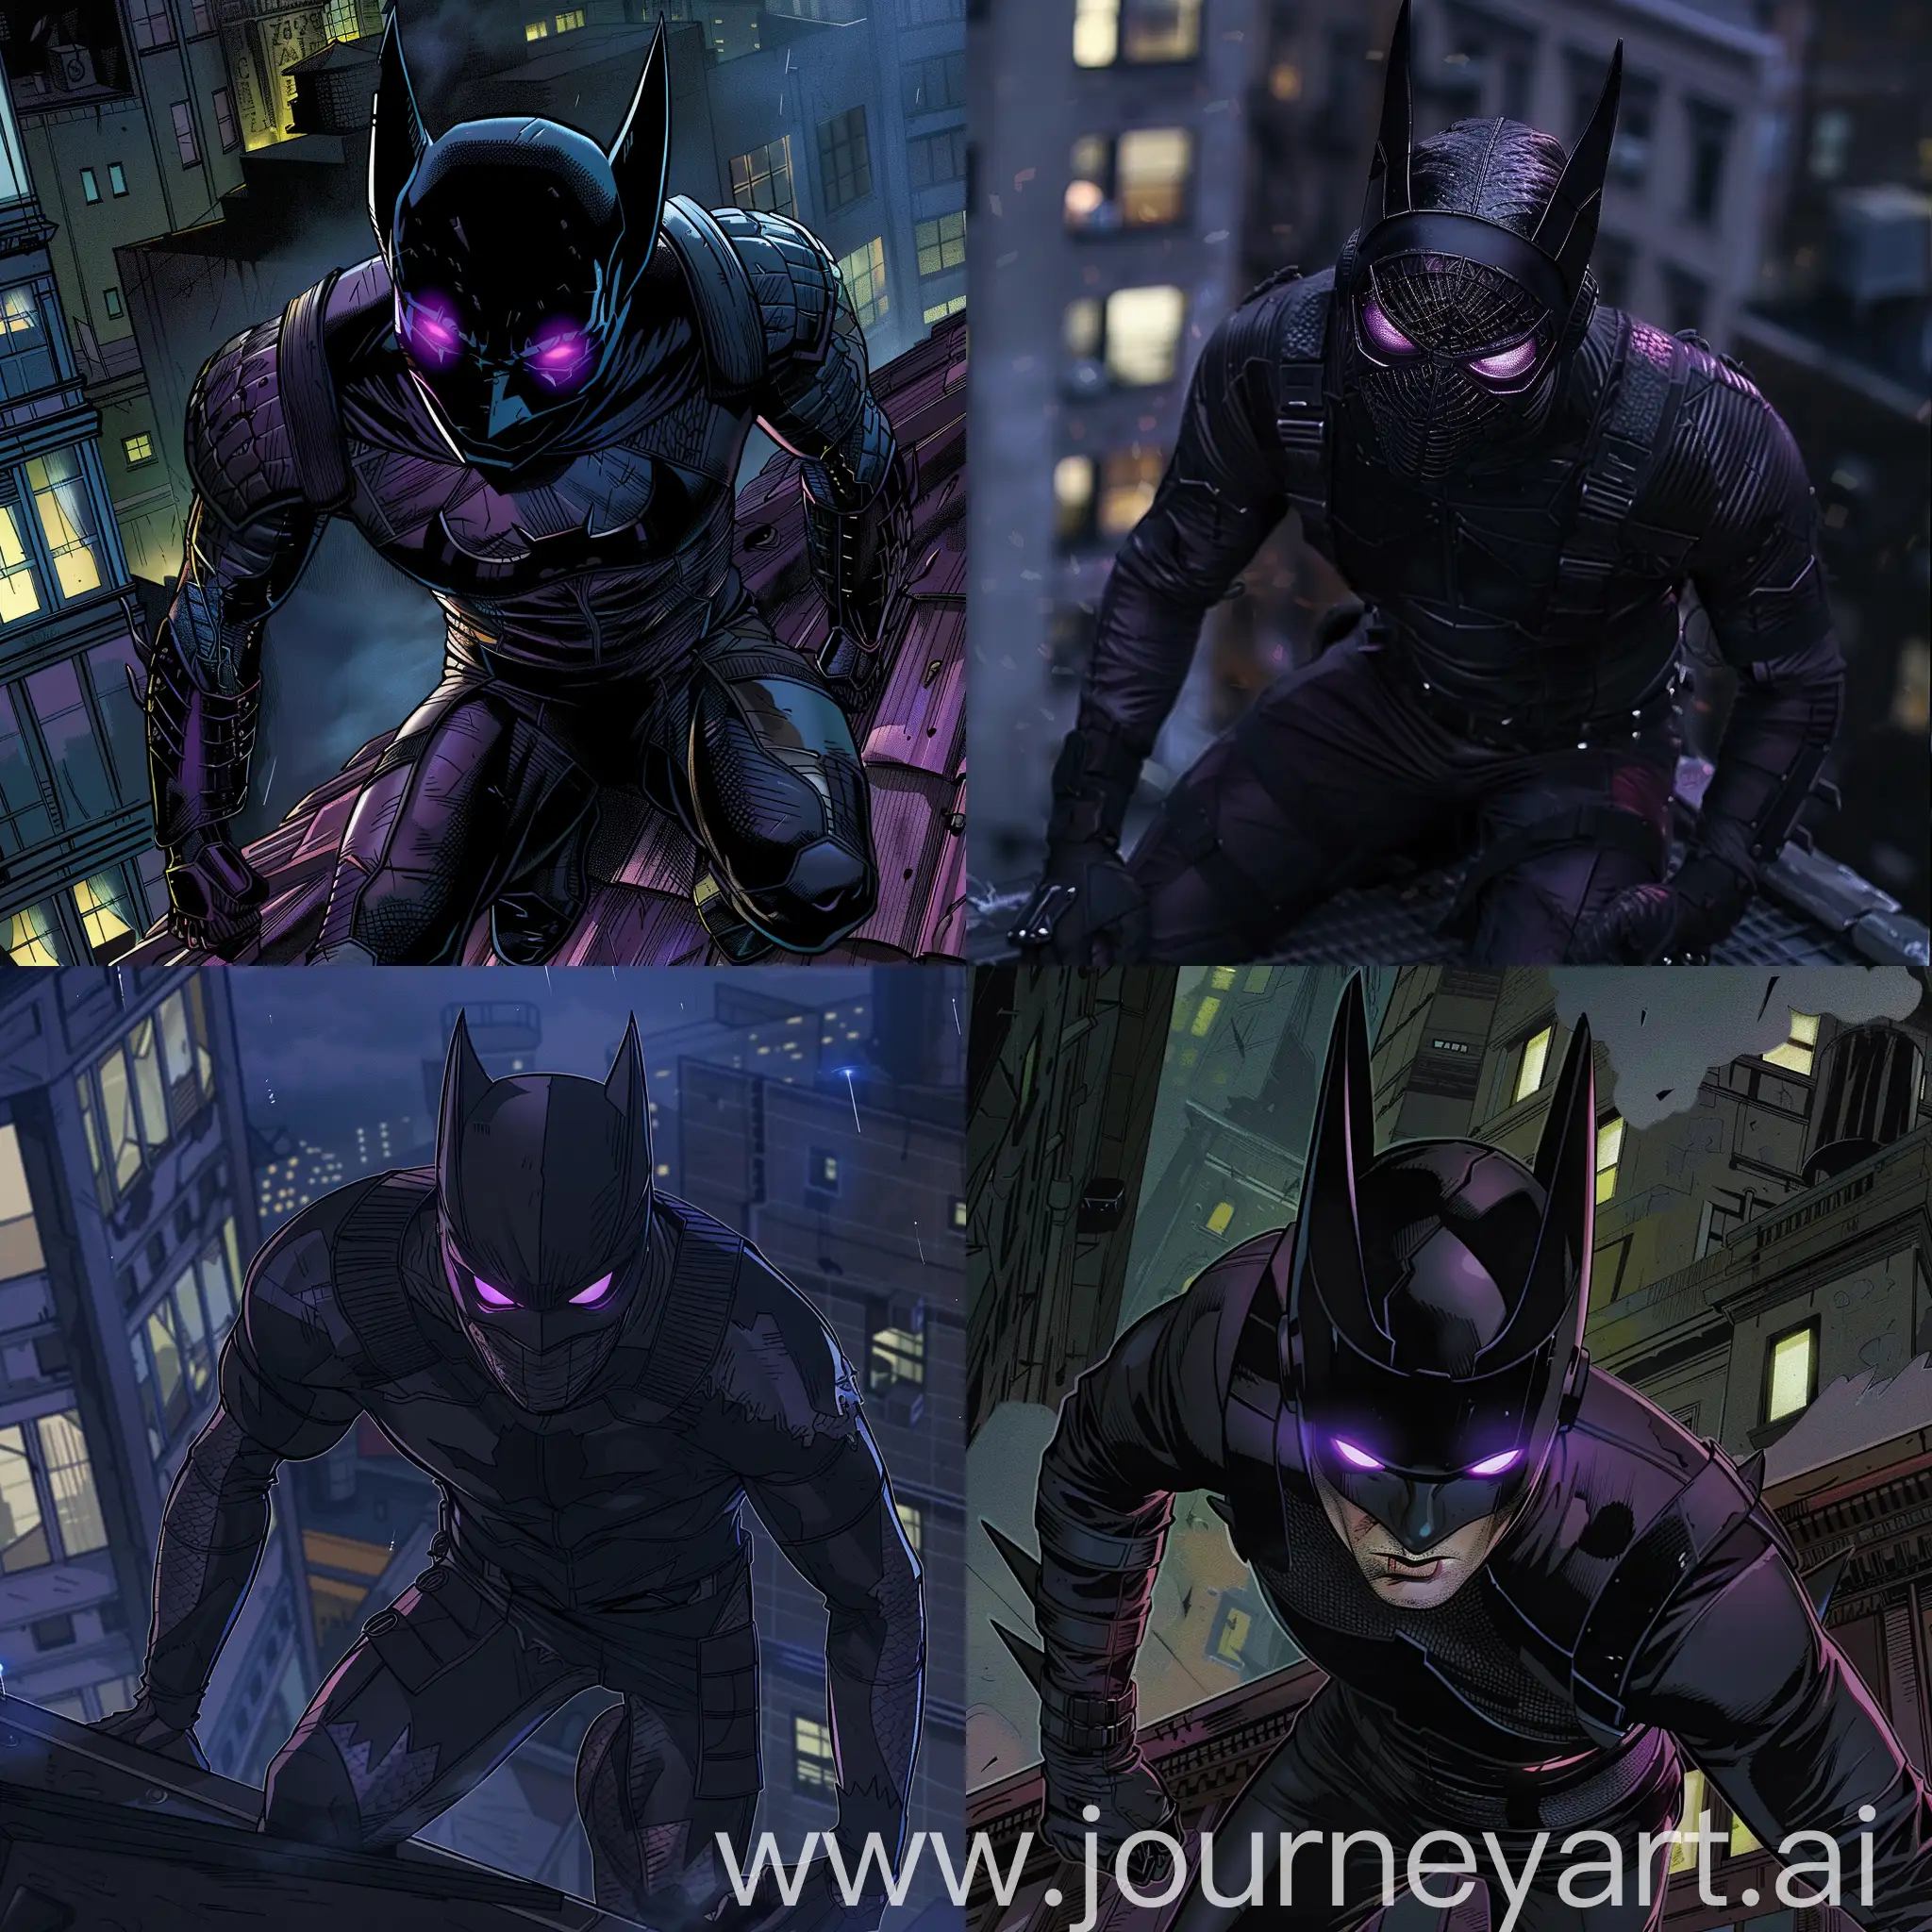 Menacing-Incubo-on-Night-City-Rooftop-Dark-Purple-Armored-Villain-in-Comic-Book-Style